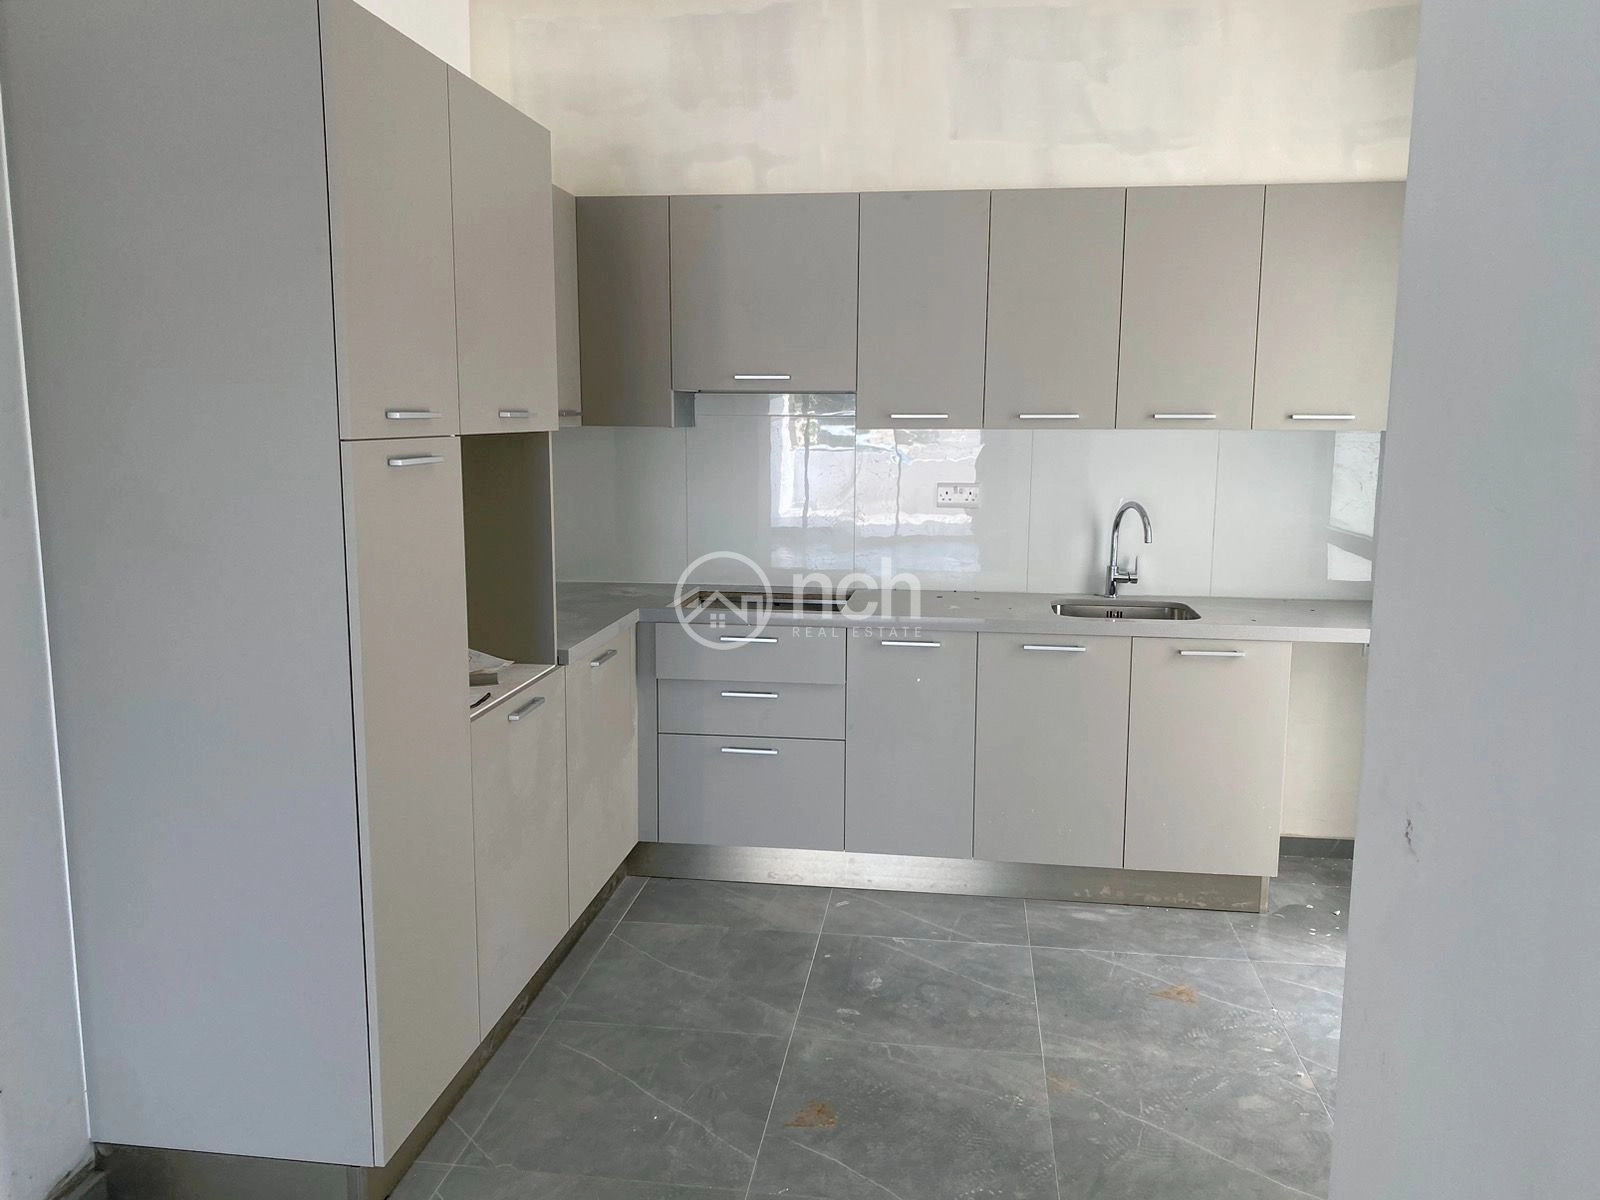 2 Bedroom Apartment for Sale in Lakatamia, Nicosia District